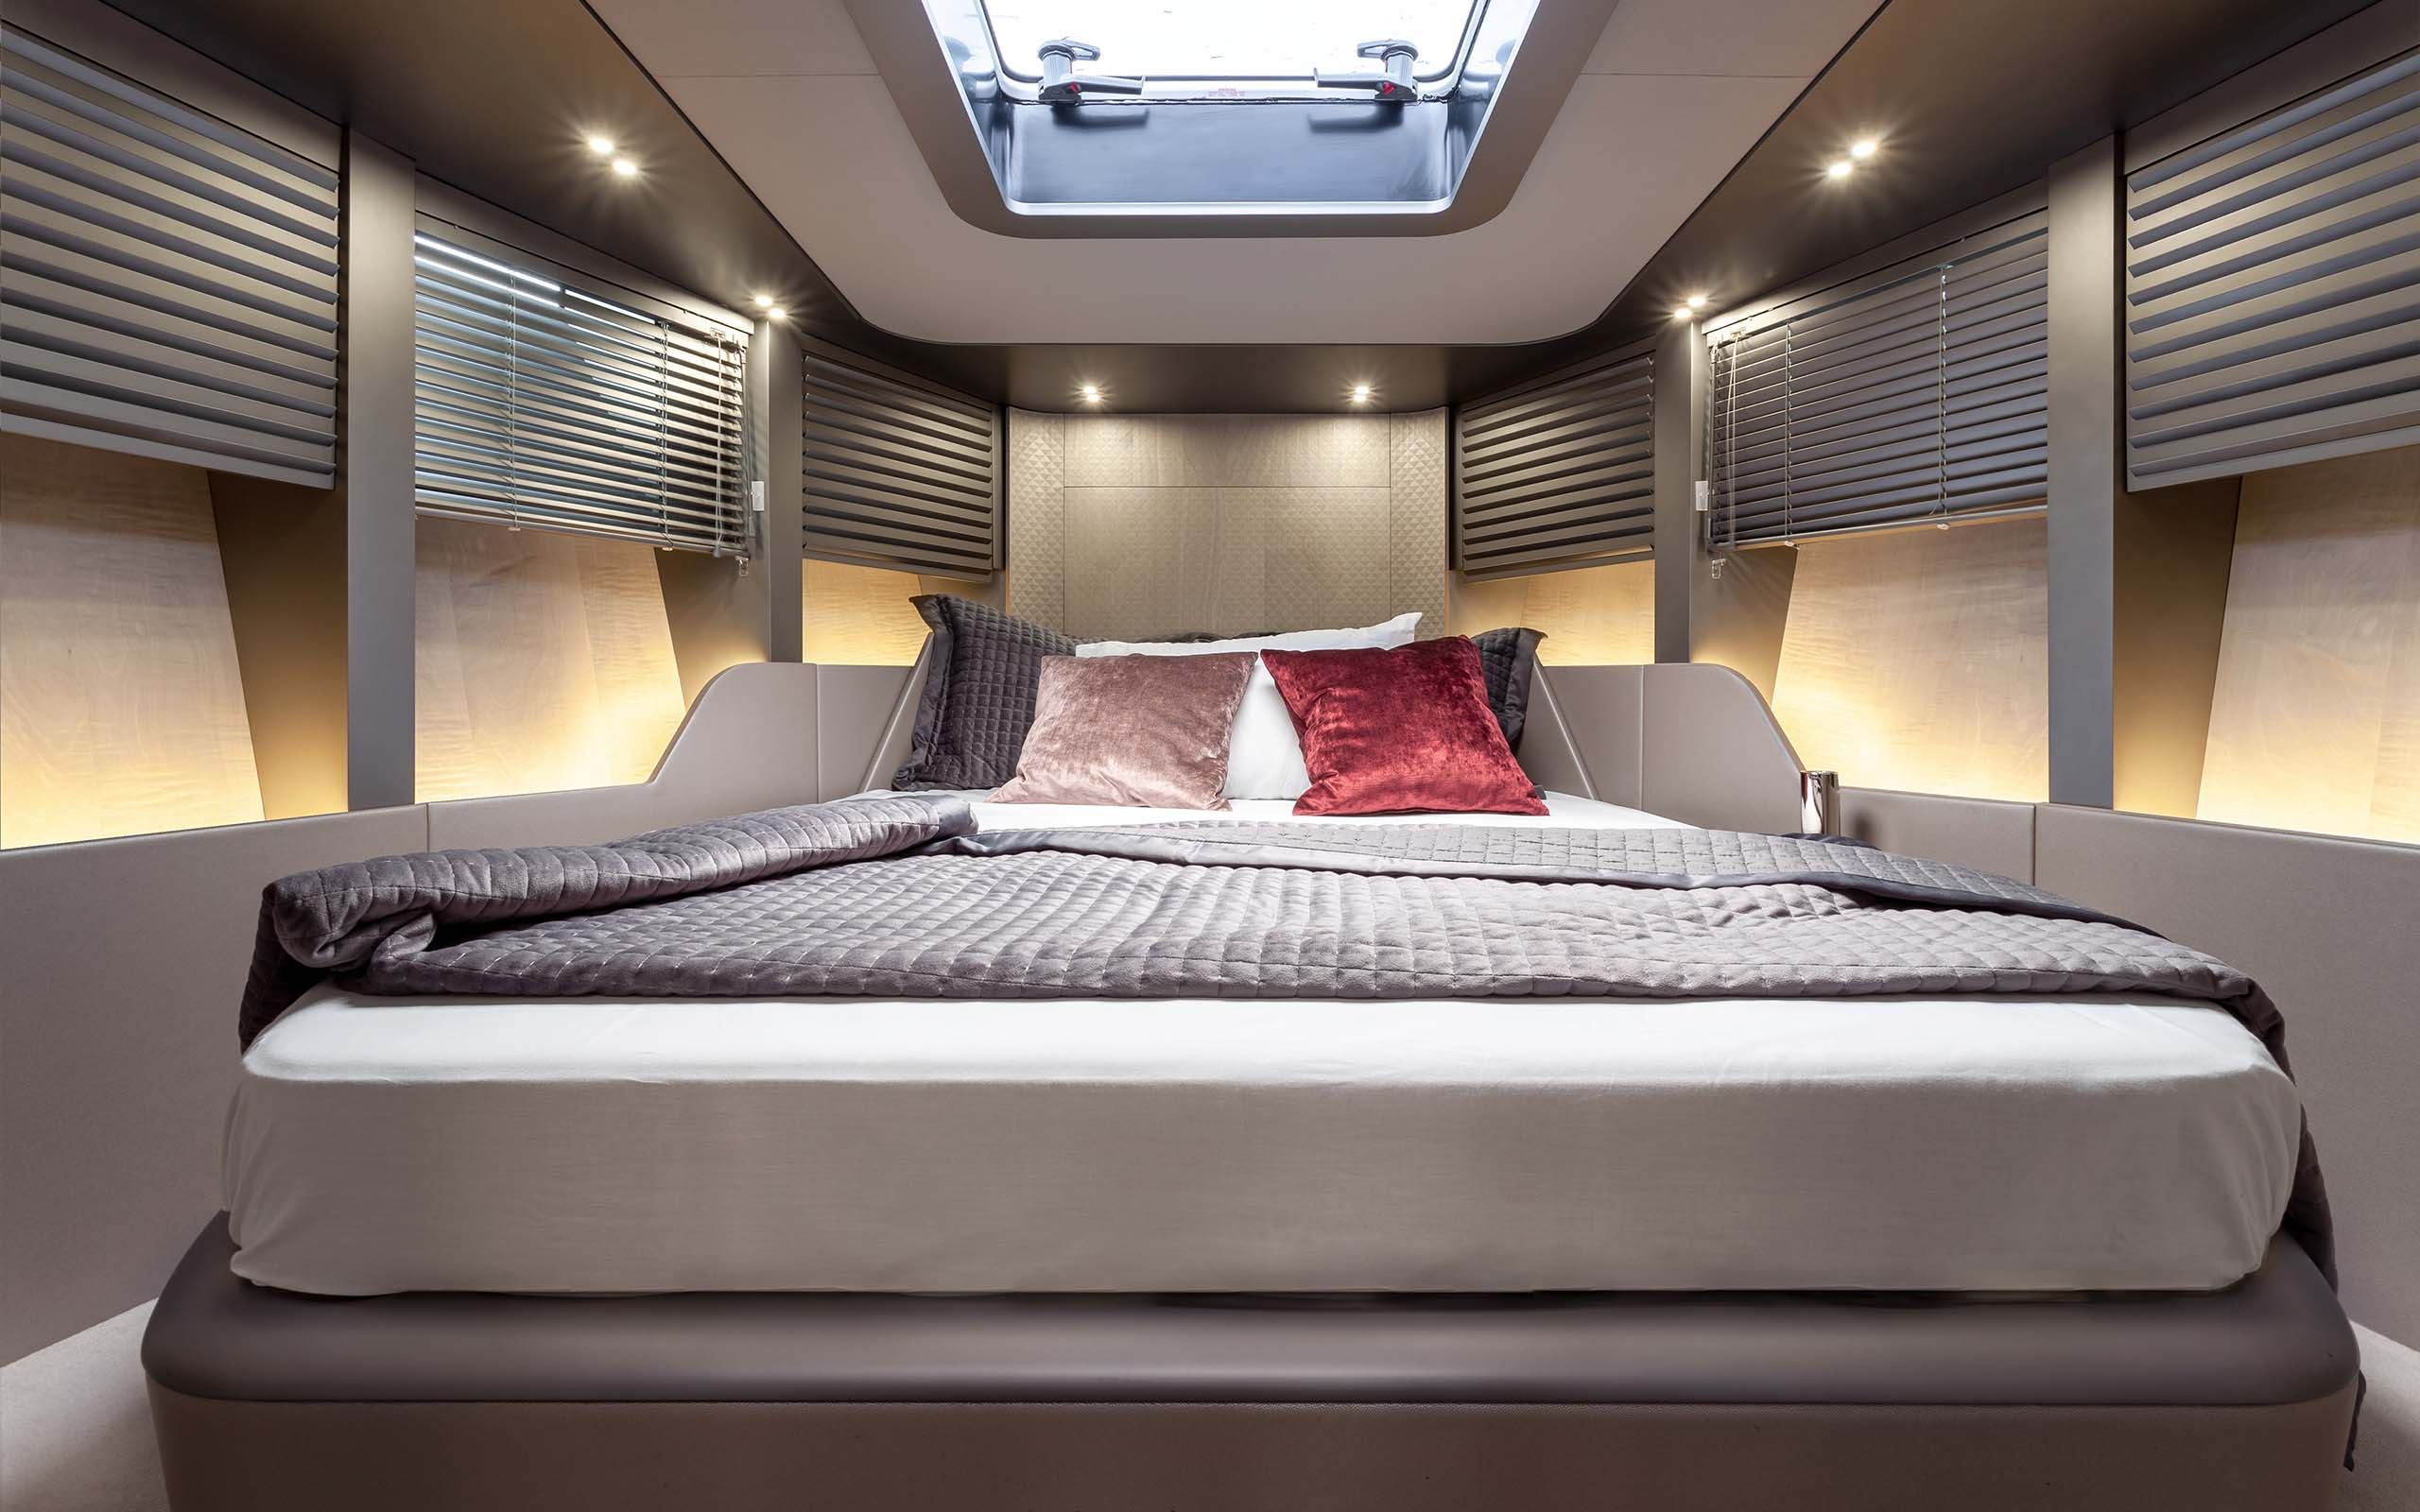 Motor Yacht 40ft Master Bedroom Interior by Suvorov Yacht Design